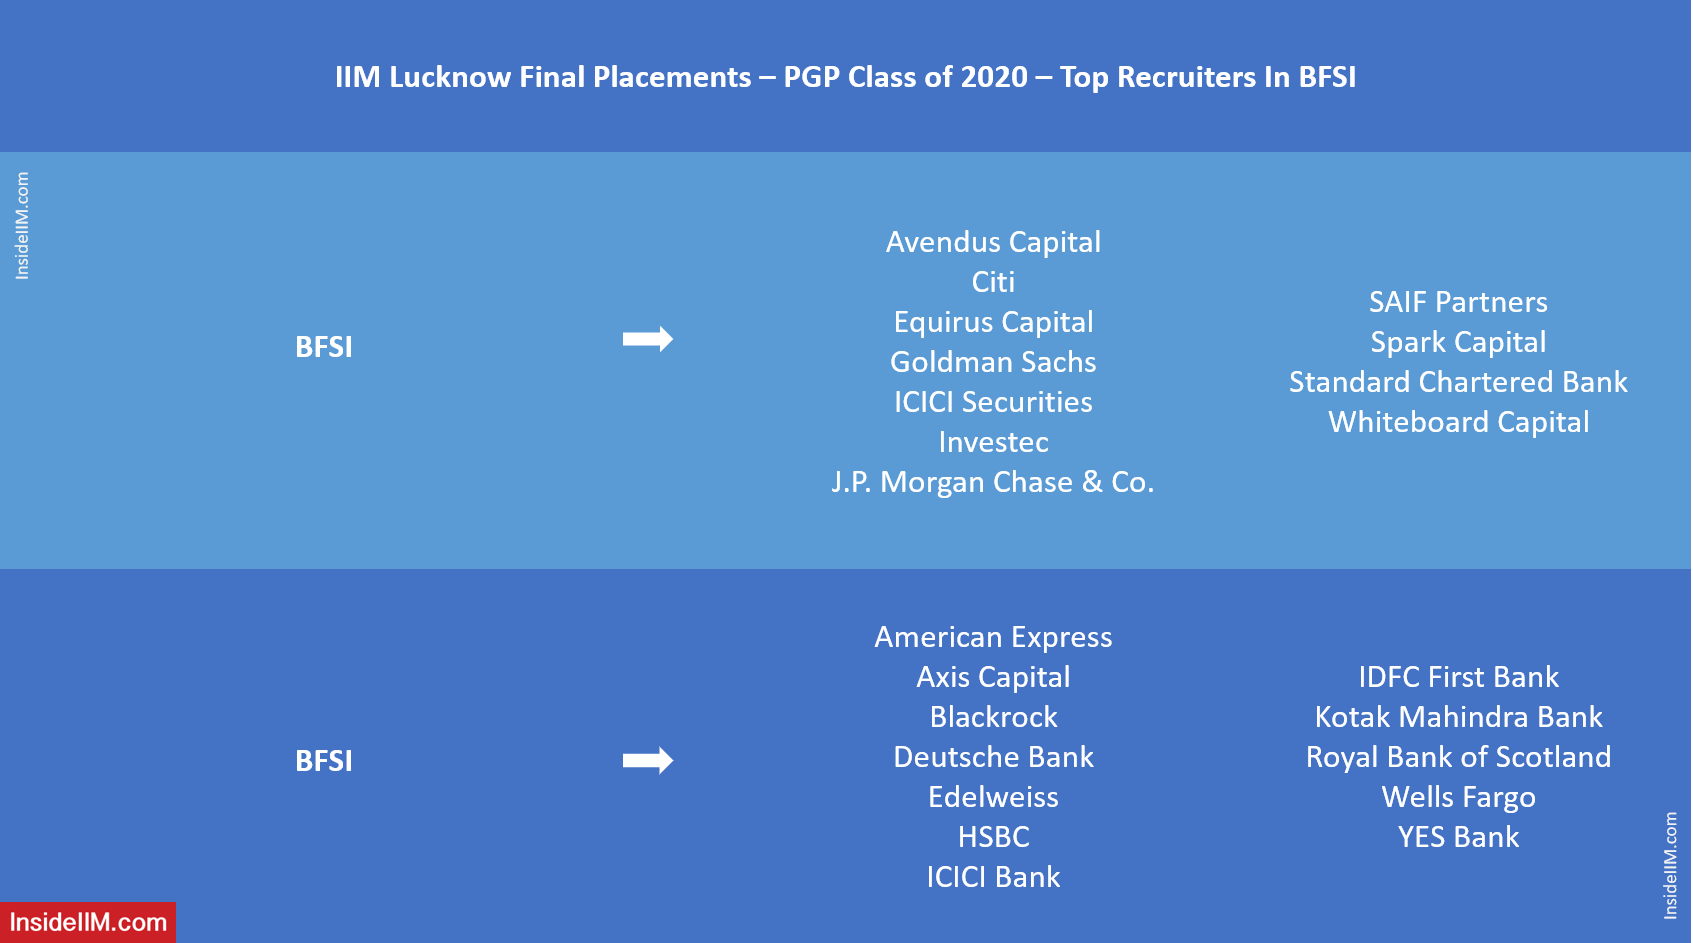 IIM Lucknow Final Placements 2020 - Top BFSI Recruiters